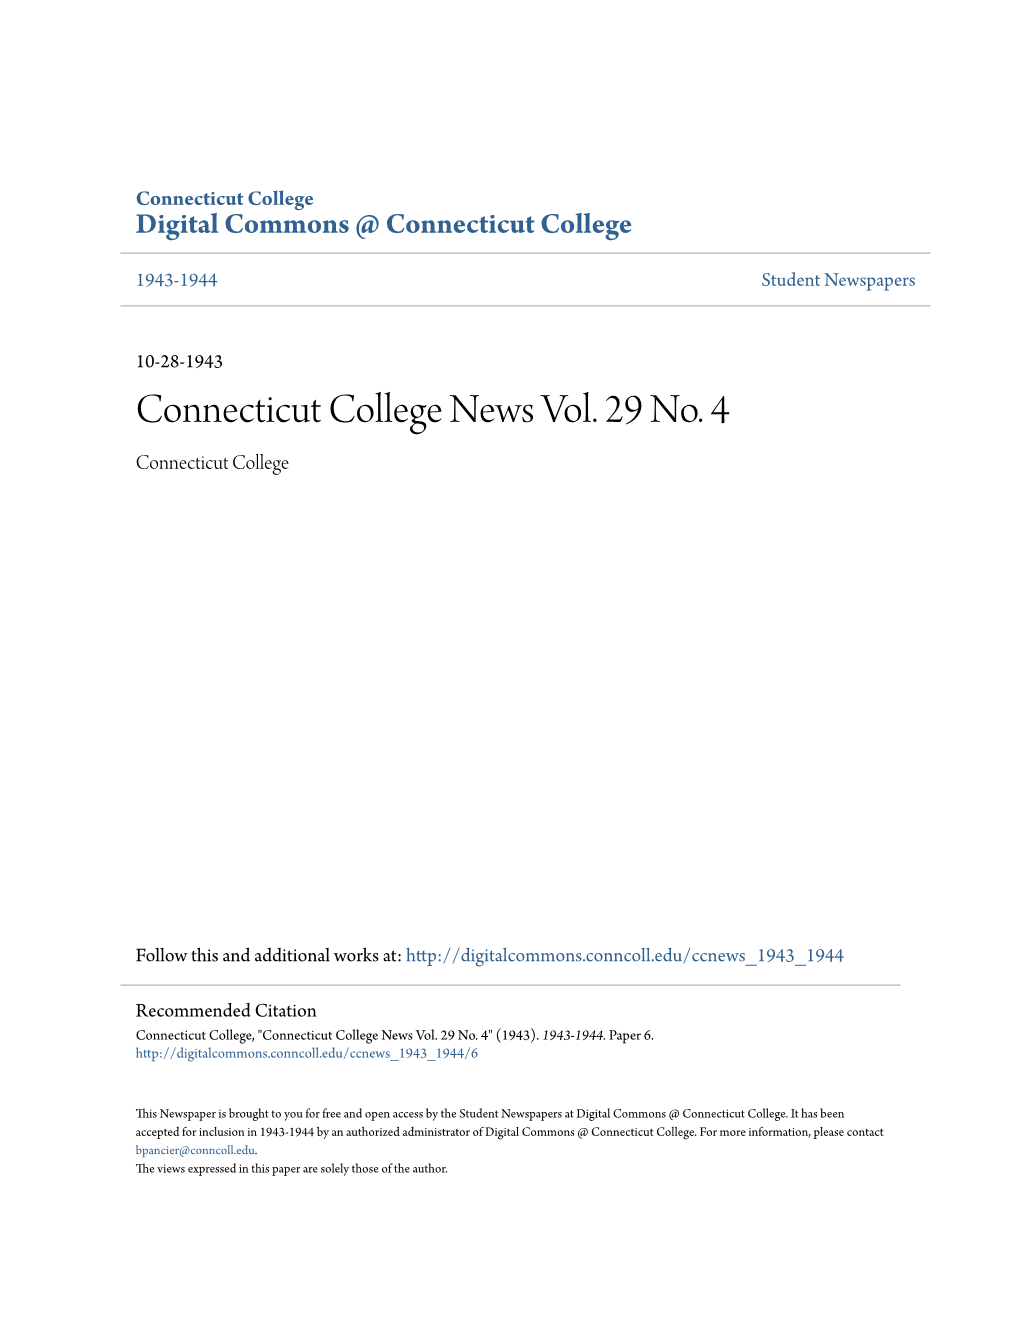 Connecticut College News Vol. 29 No. 4 Connecticut College